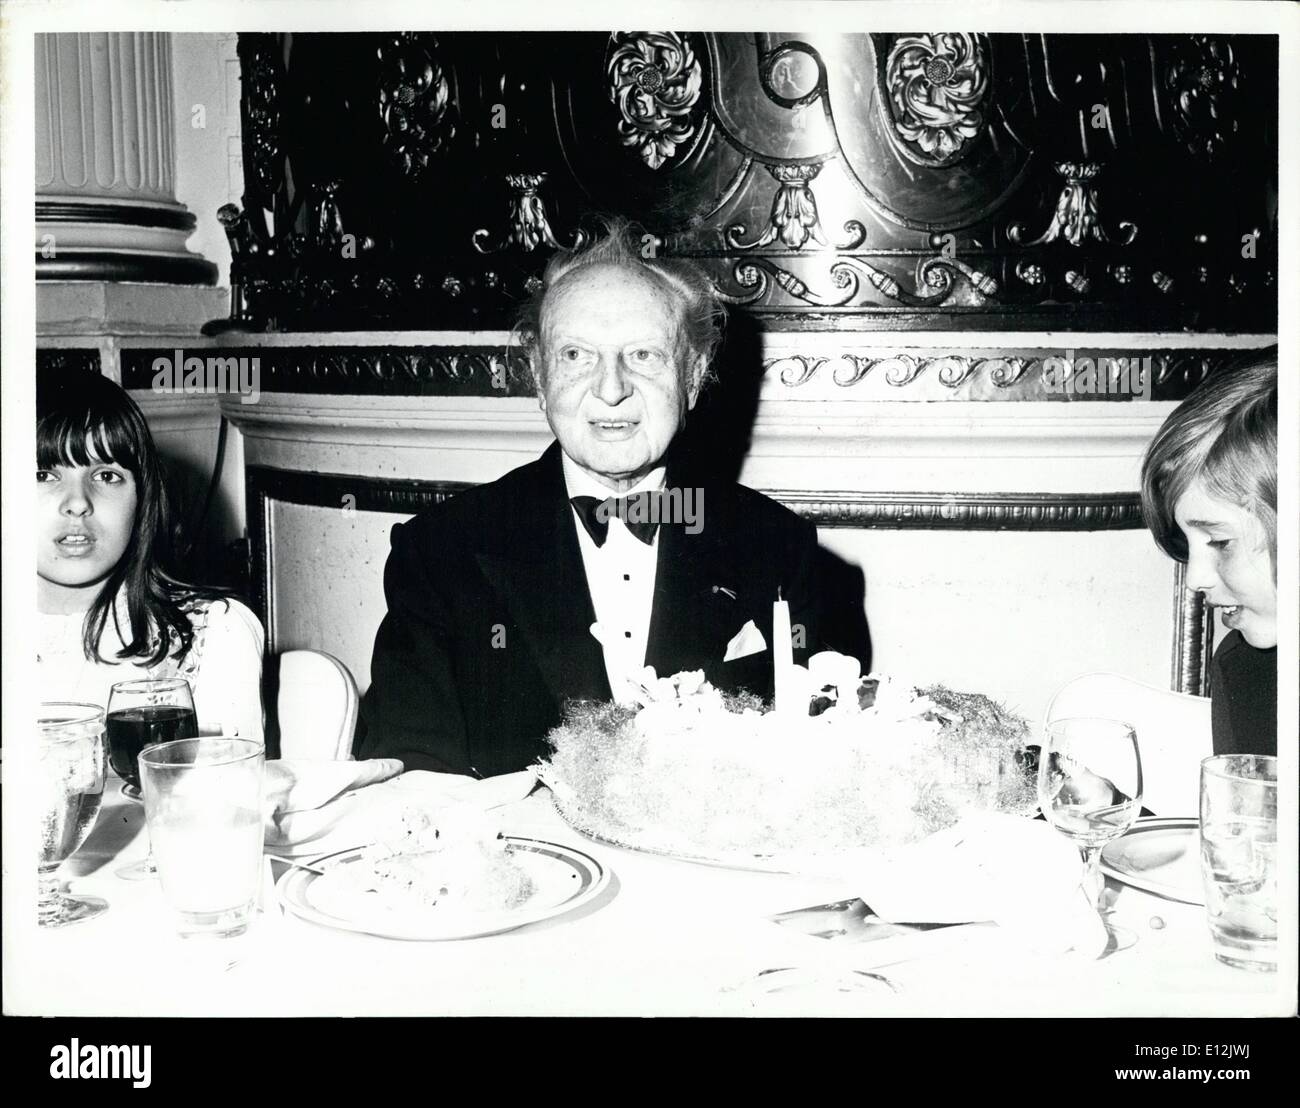 Feb. 24, 2012 - Leopold Stokowski 90th birthday, Hotel Plaza, NYC, with two of his grandchildren. Stock Photo